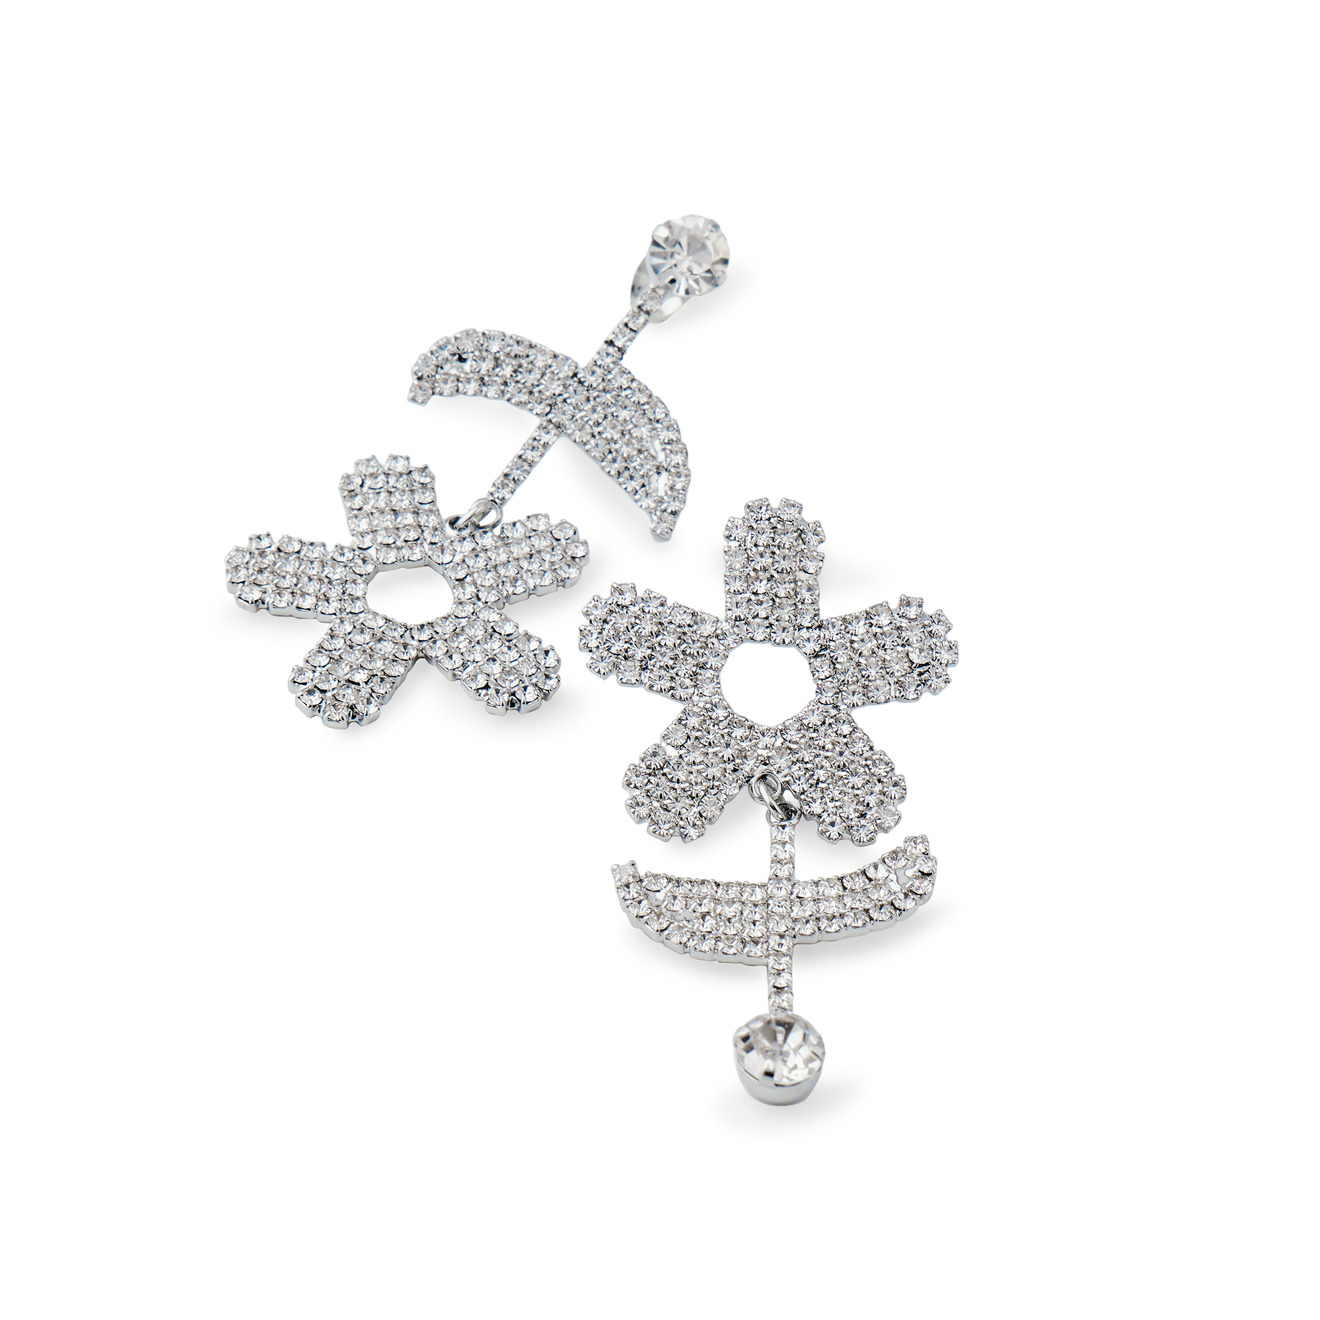 Herald Percy Серебристые серьги-цветы с кристаллами herald percy серебристые серьги стрелки с кристаллами